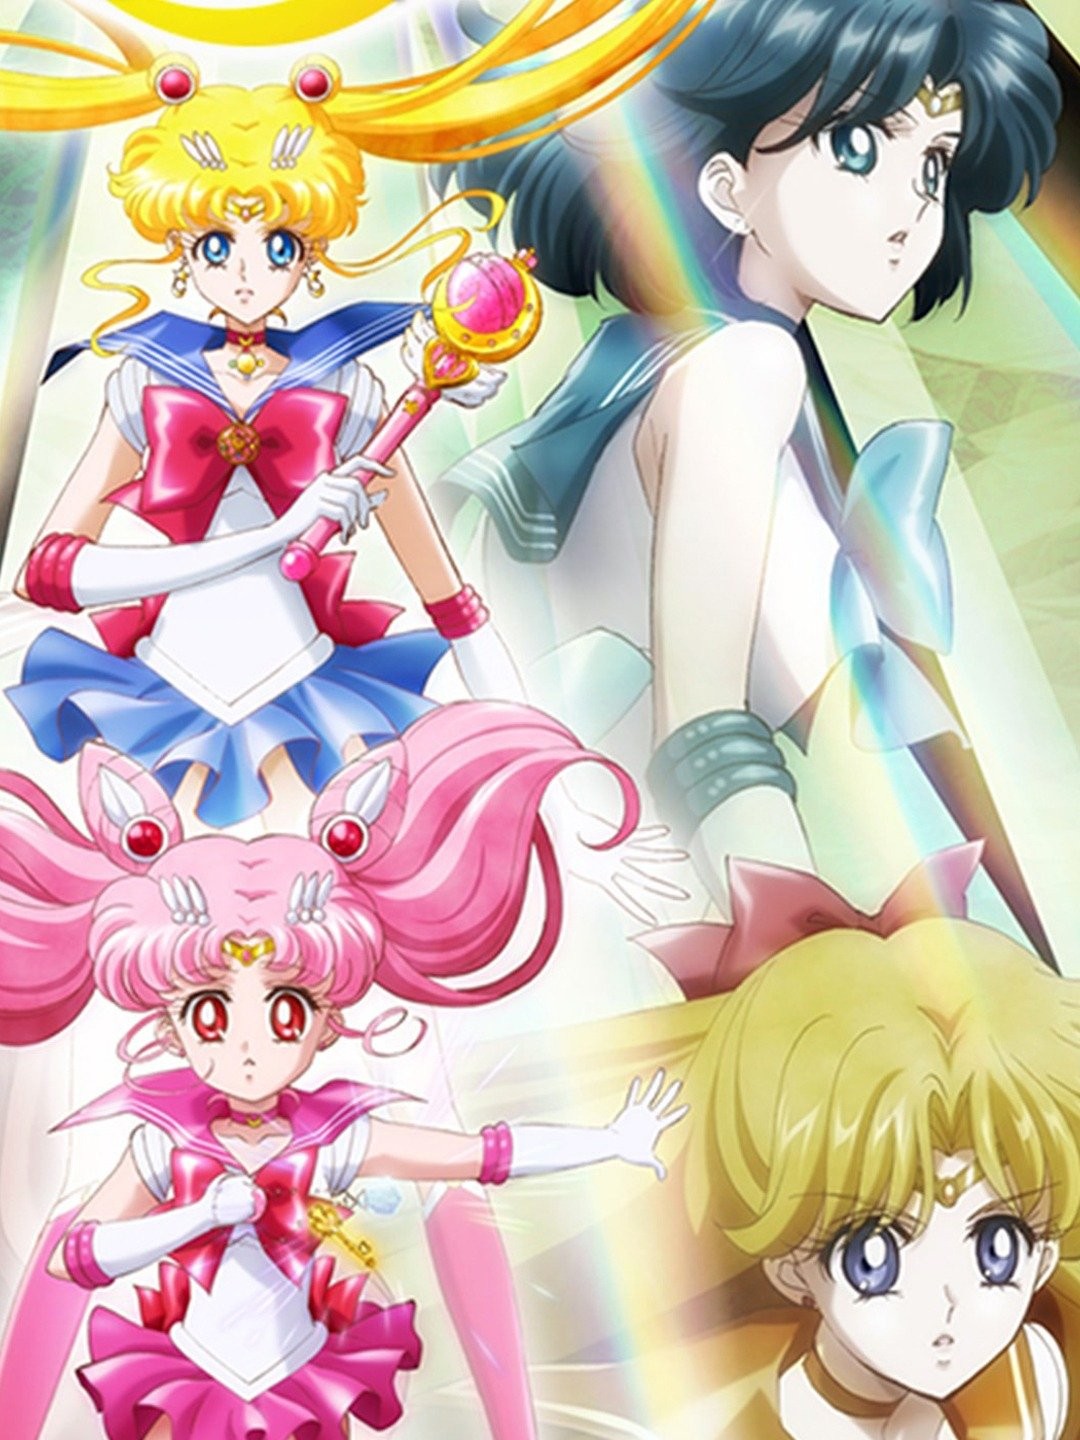 Sailor Moon: Crystal: Act 1 - Usagi, Sailor Moon Review - IGN